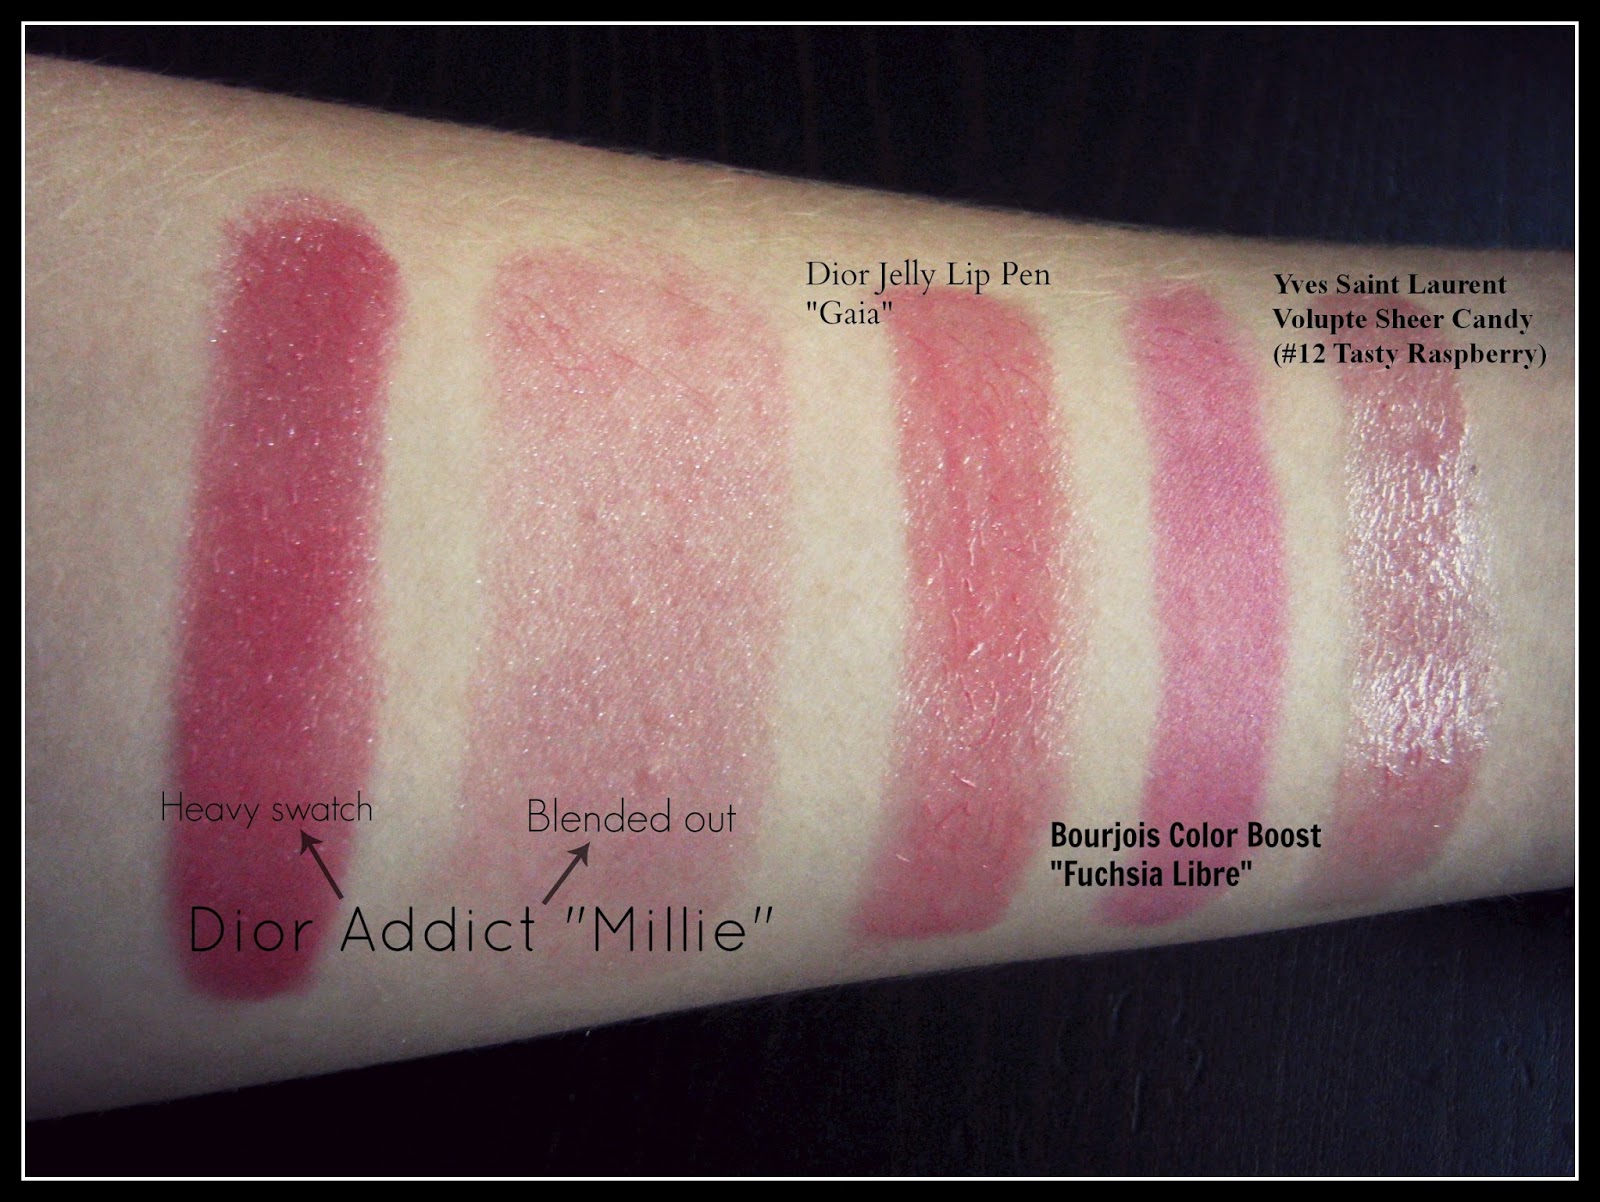 dior addict lipstick 680